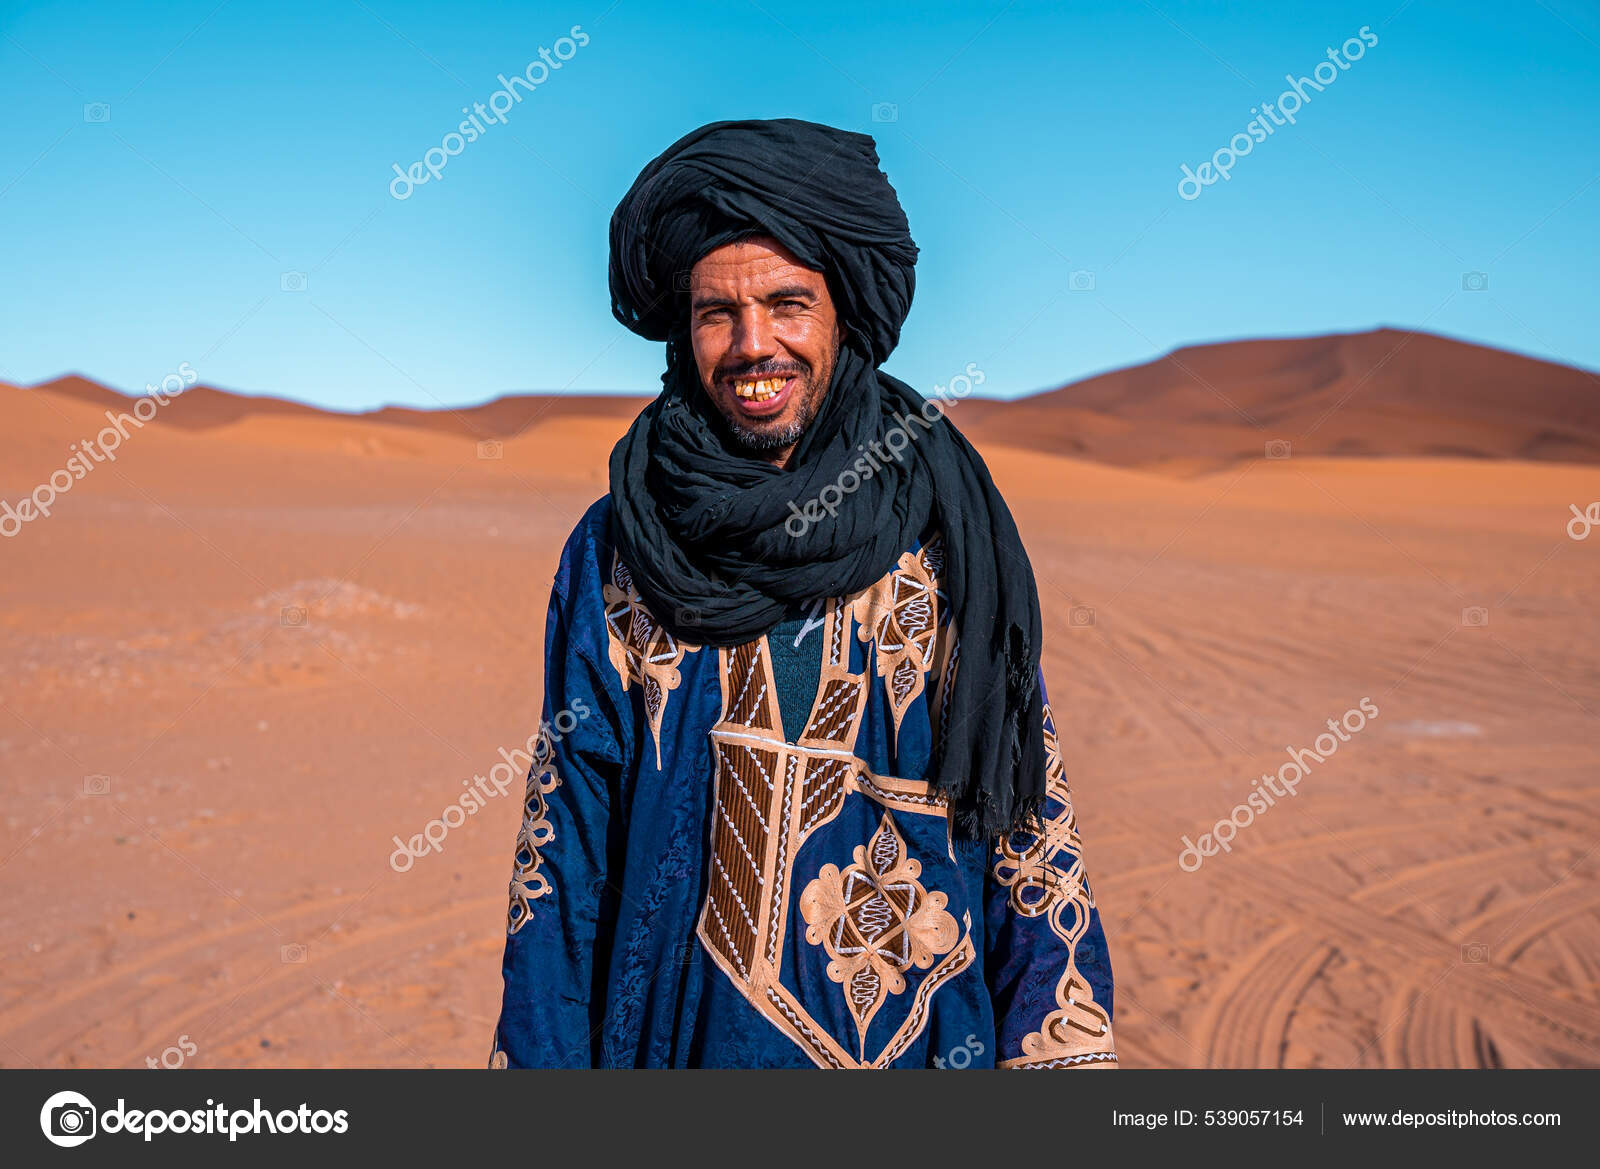 https://st.depositphotos.com/6105212/53905/i/1600/depositphotos_539057154-stock-photo-bedouin-man-wears-traditional-clothes.jpg